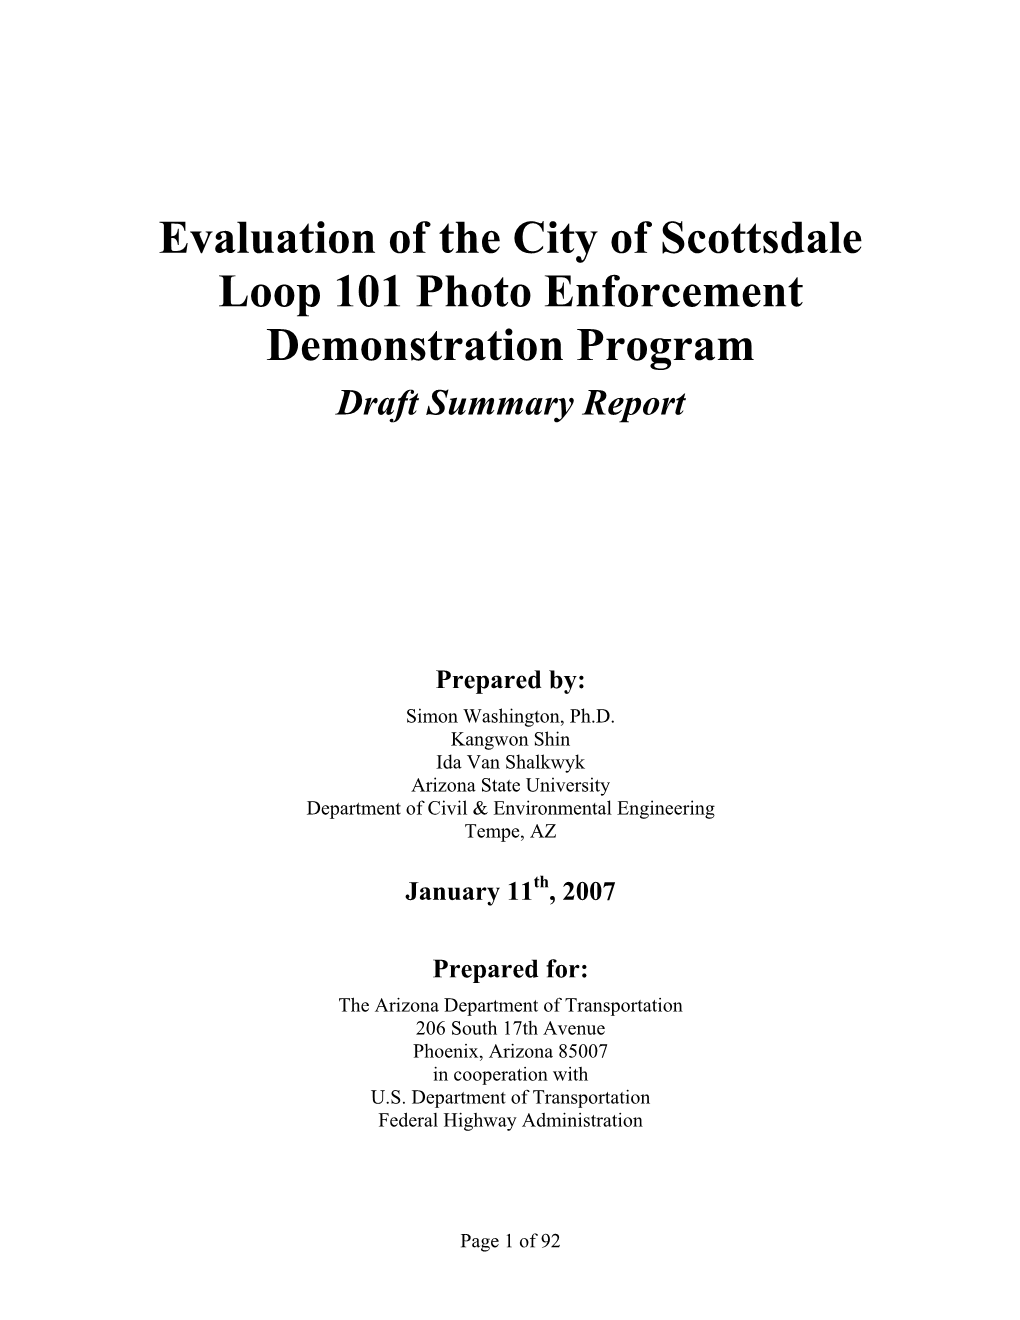 Evaluation of Scottsdale 101 Photo Enforcement Demonstration Program